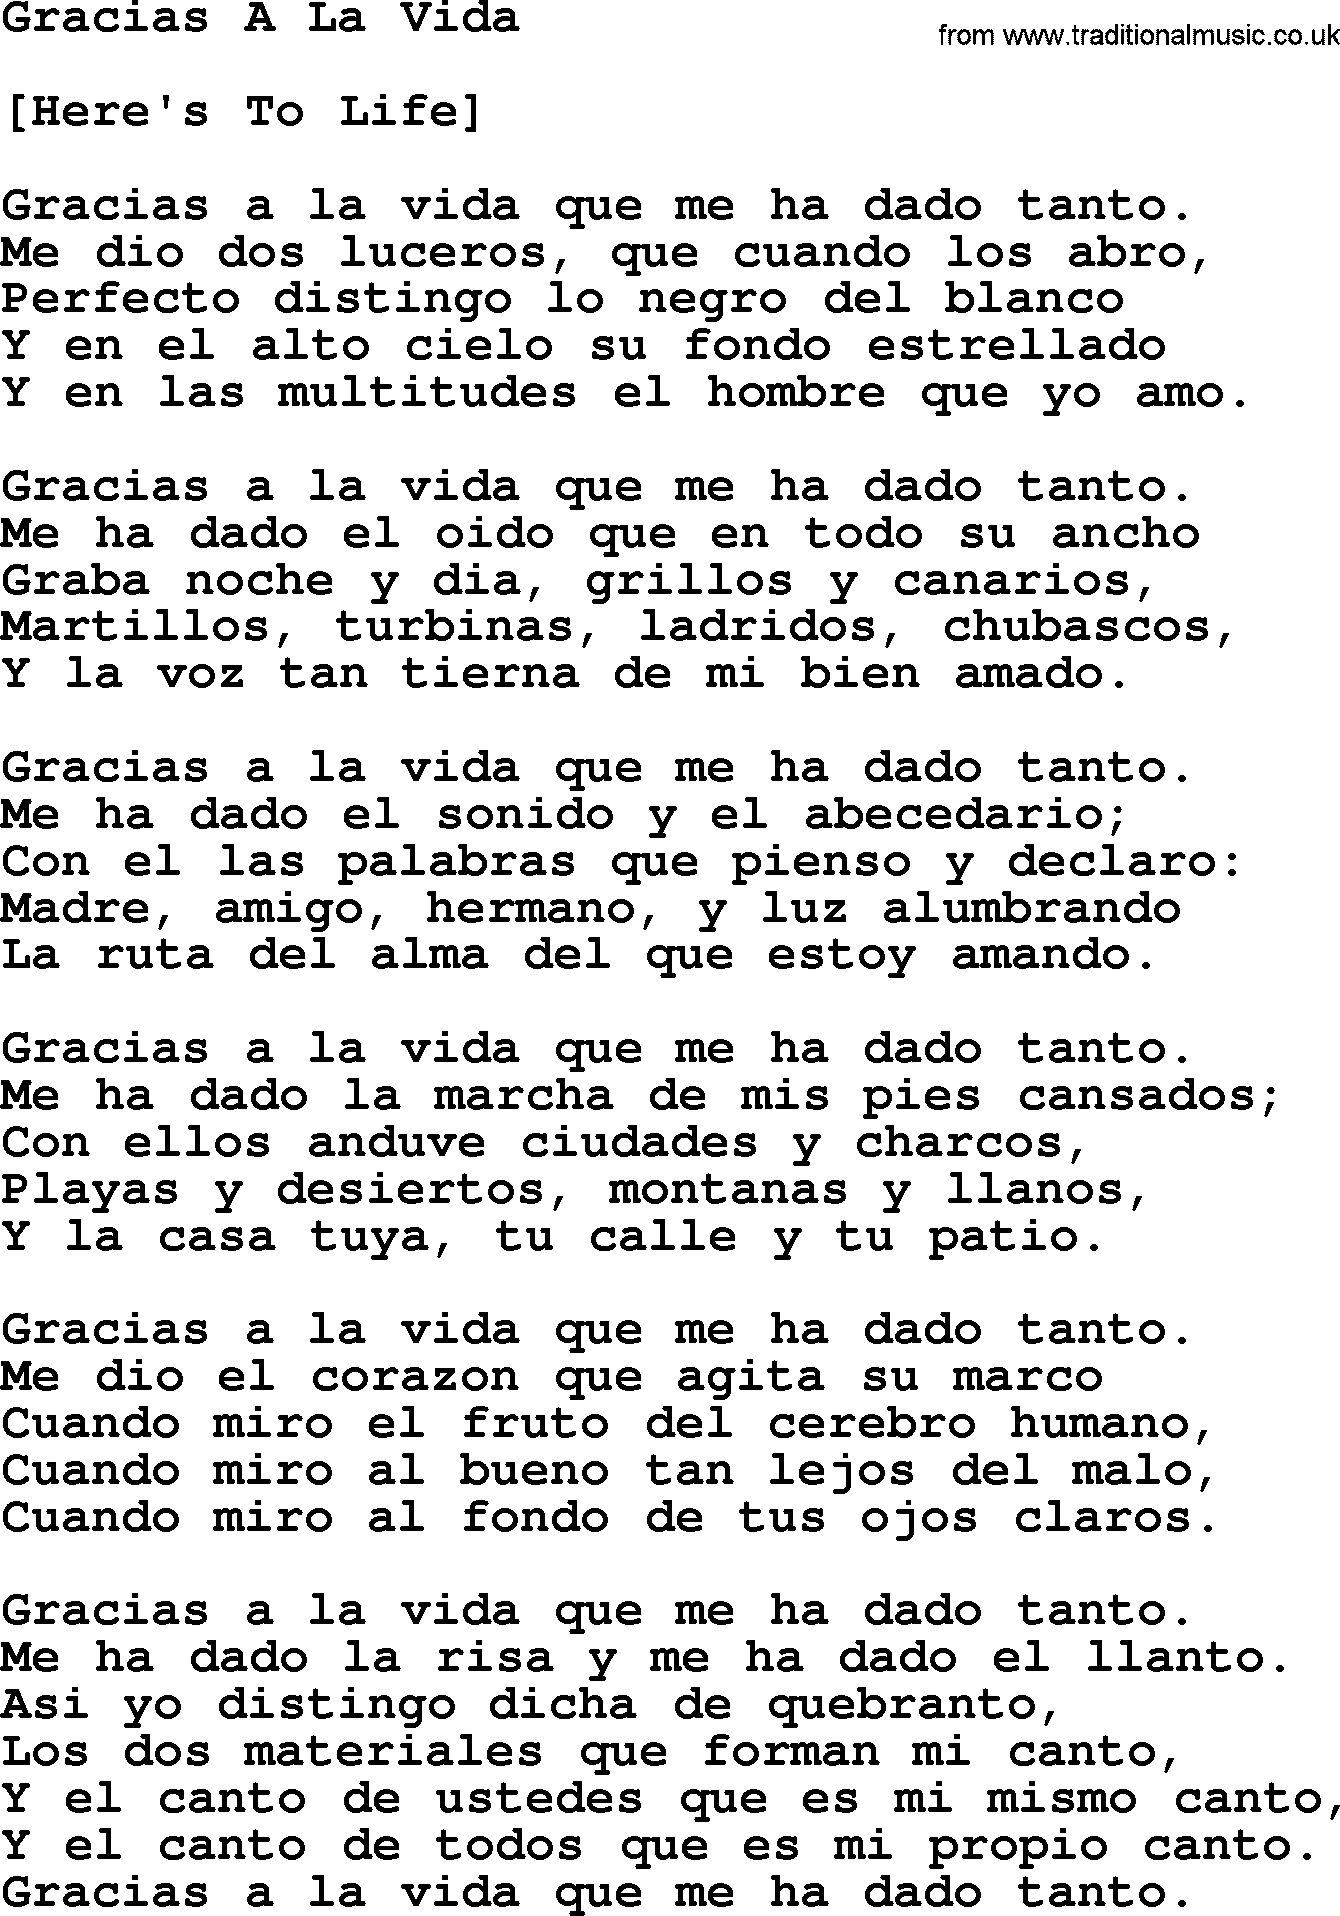 Joan Baez song Gracias A La Vida, lyrics